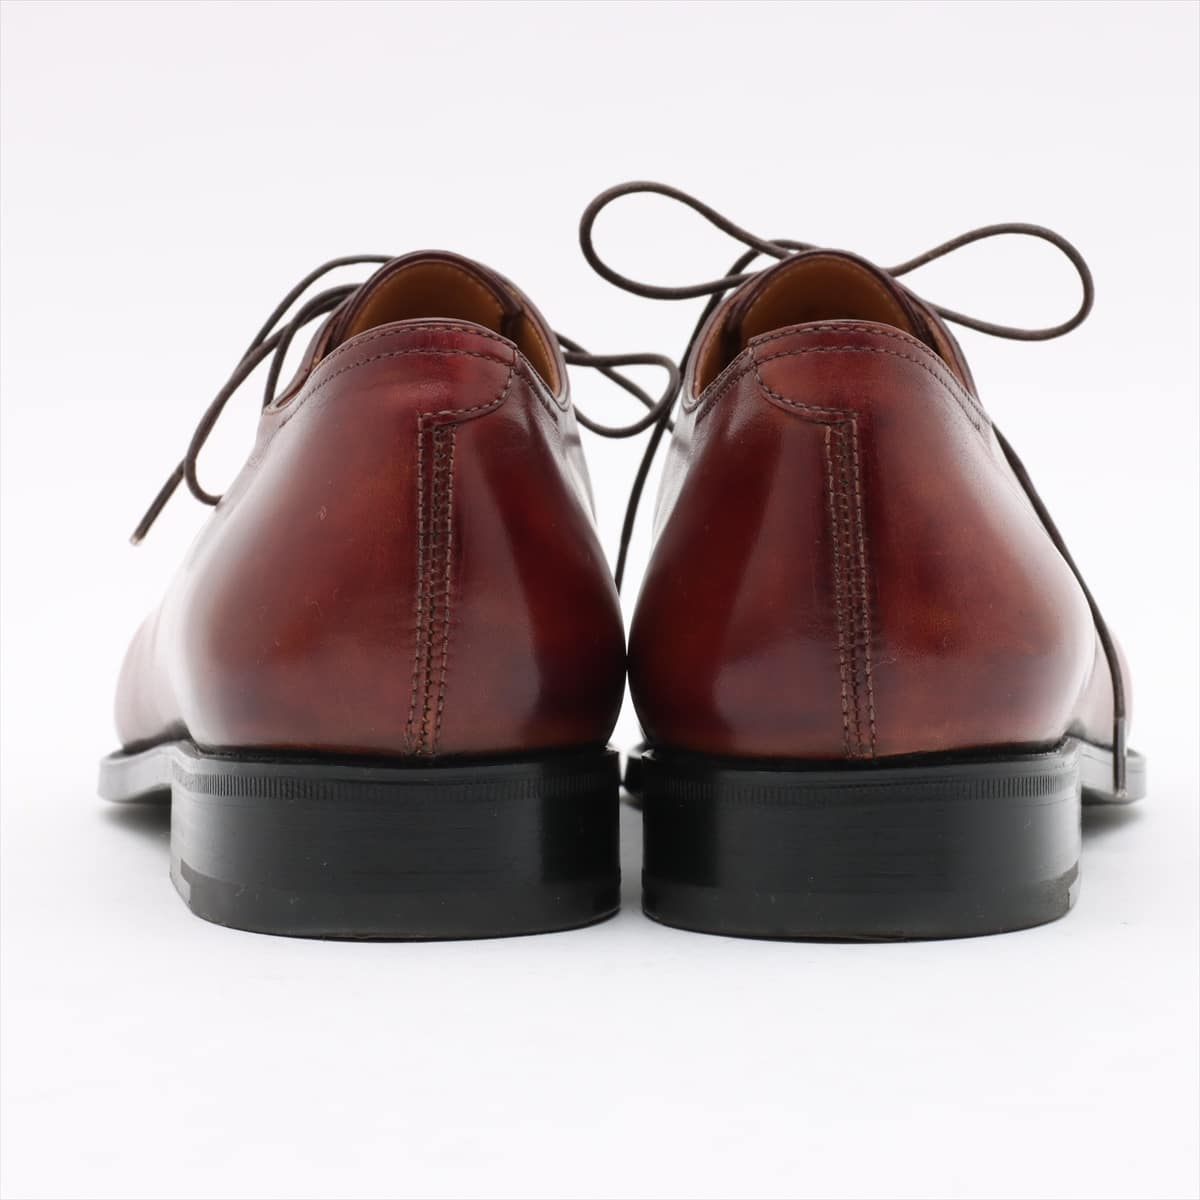 Berluti Alessandro Leather Dress shoes 6 1/2 Men's Red last 0791 Demjour